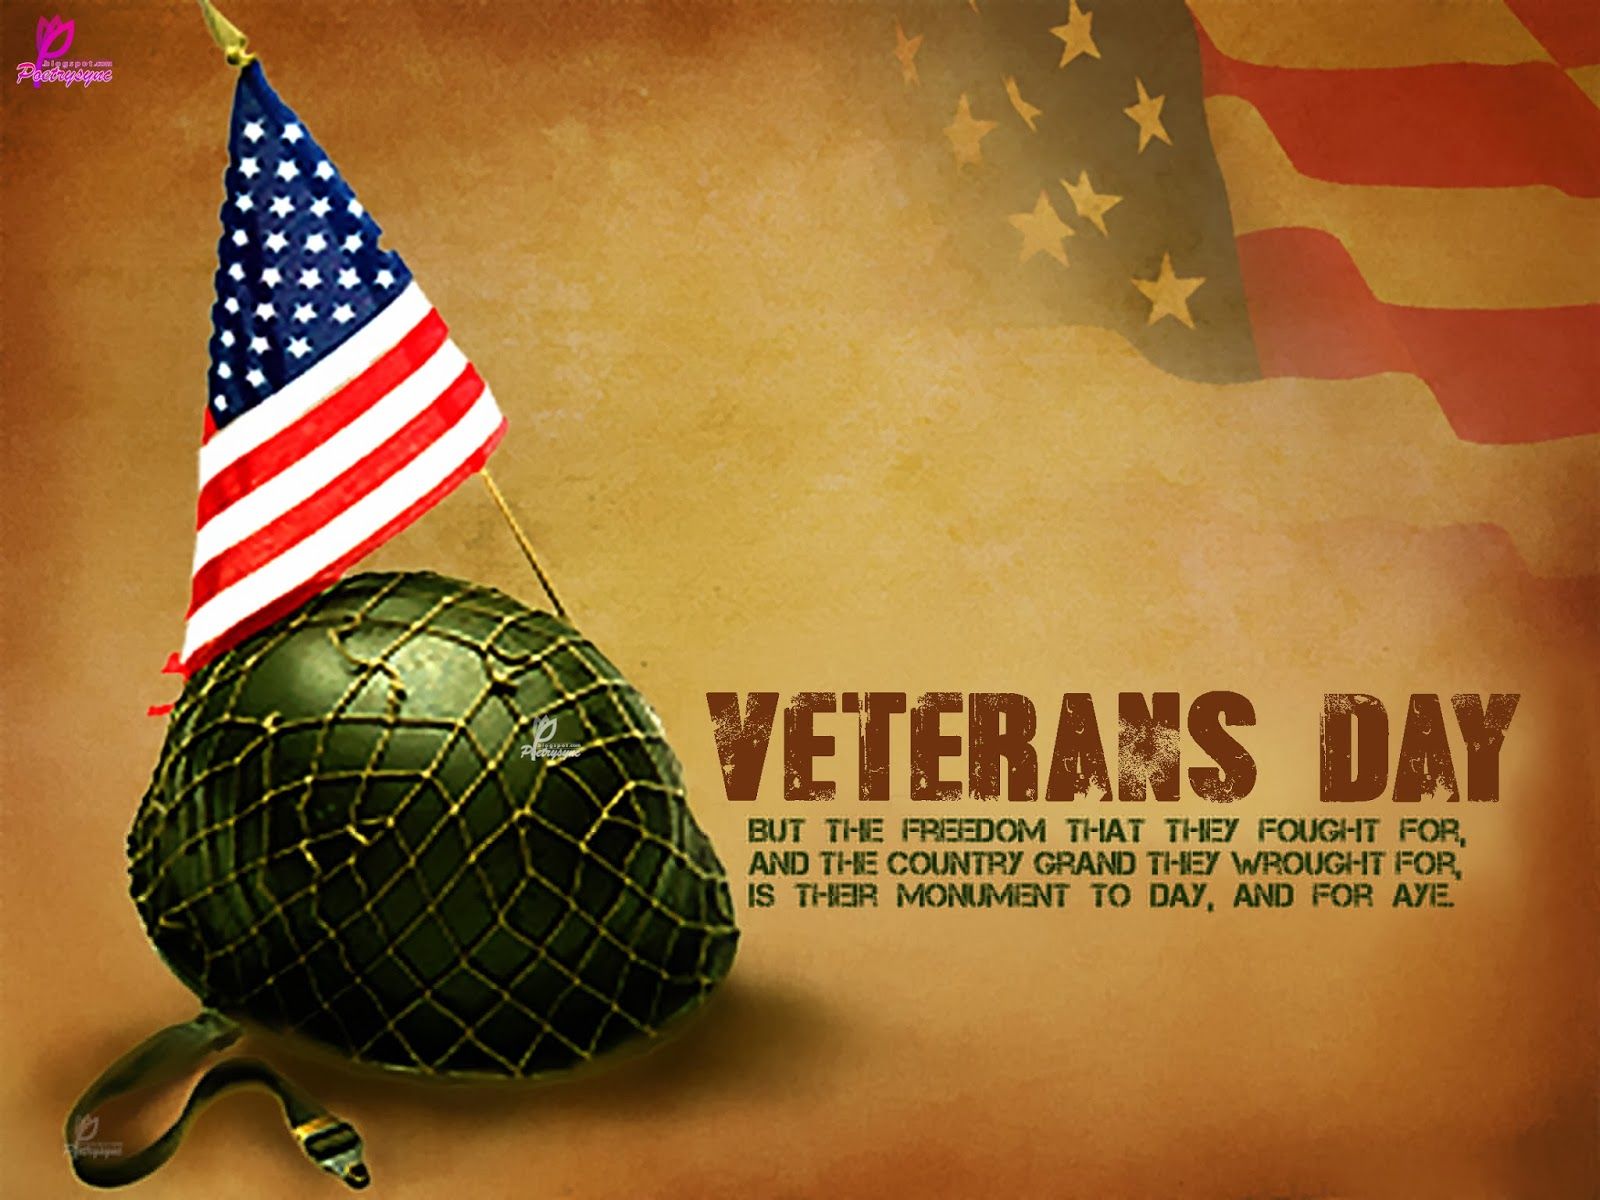 Veterans Day Thank You - wallpaper.